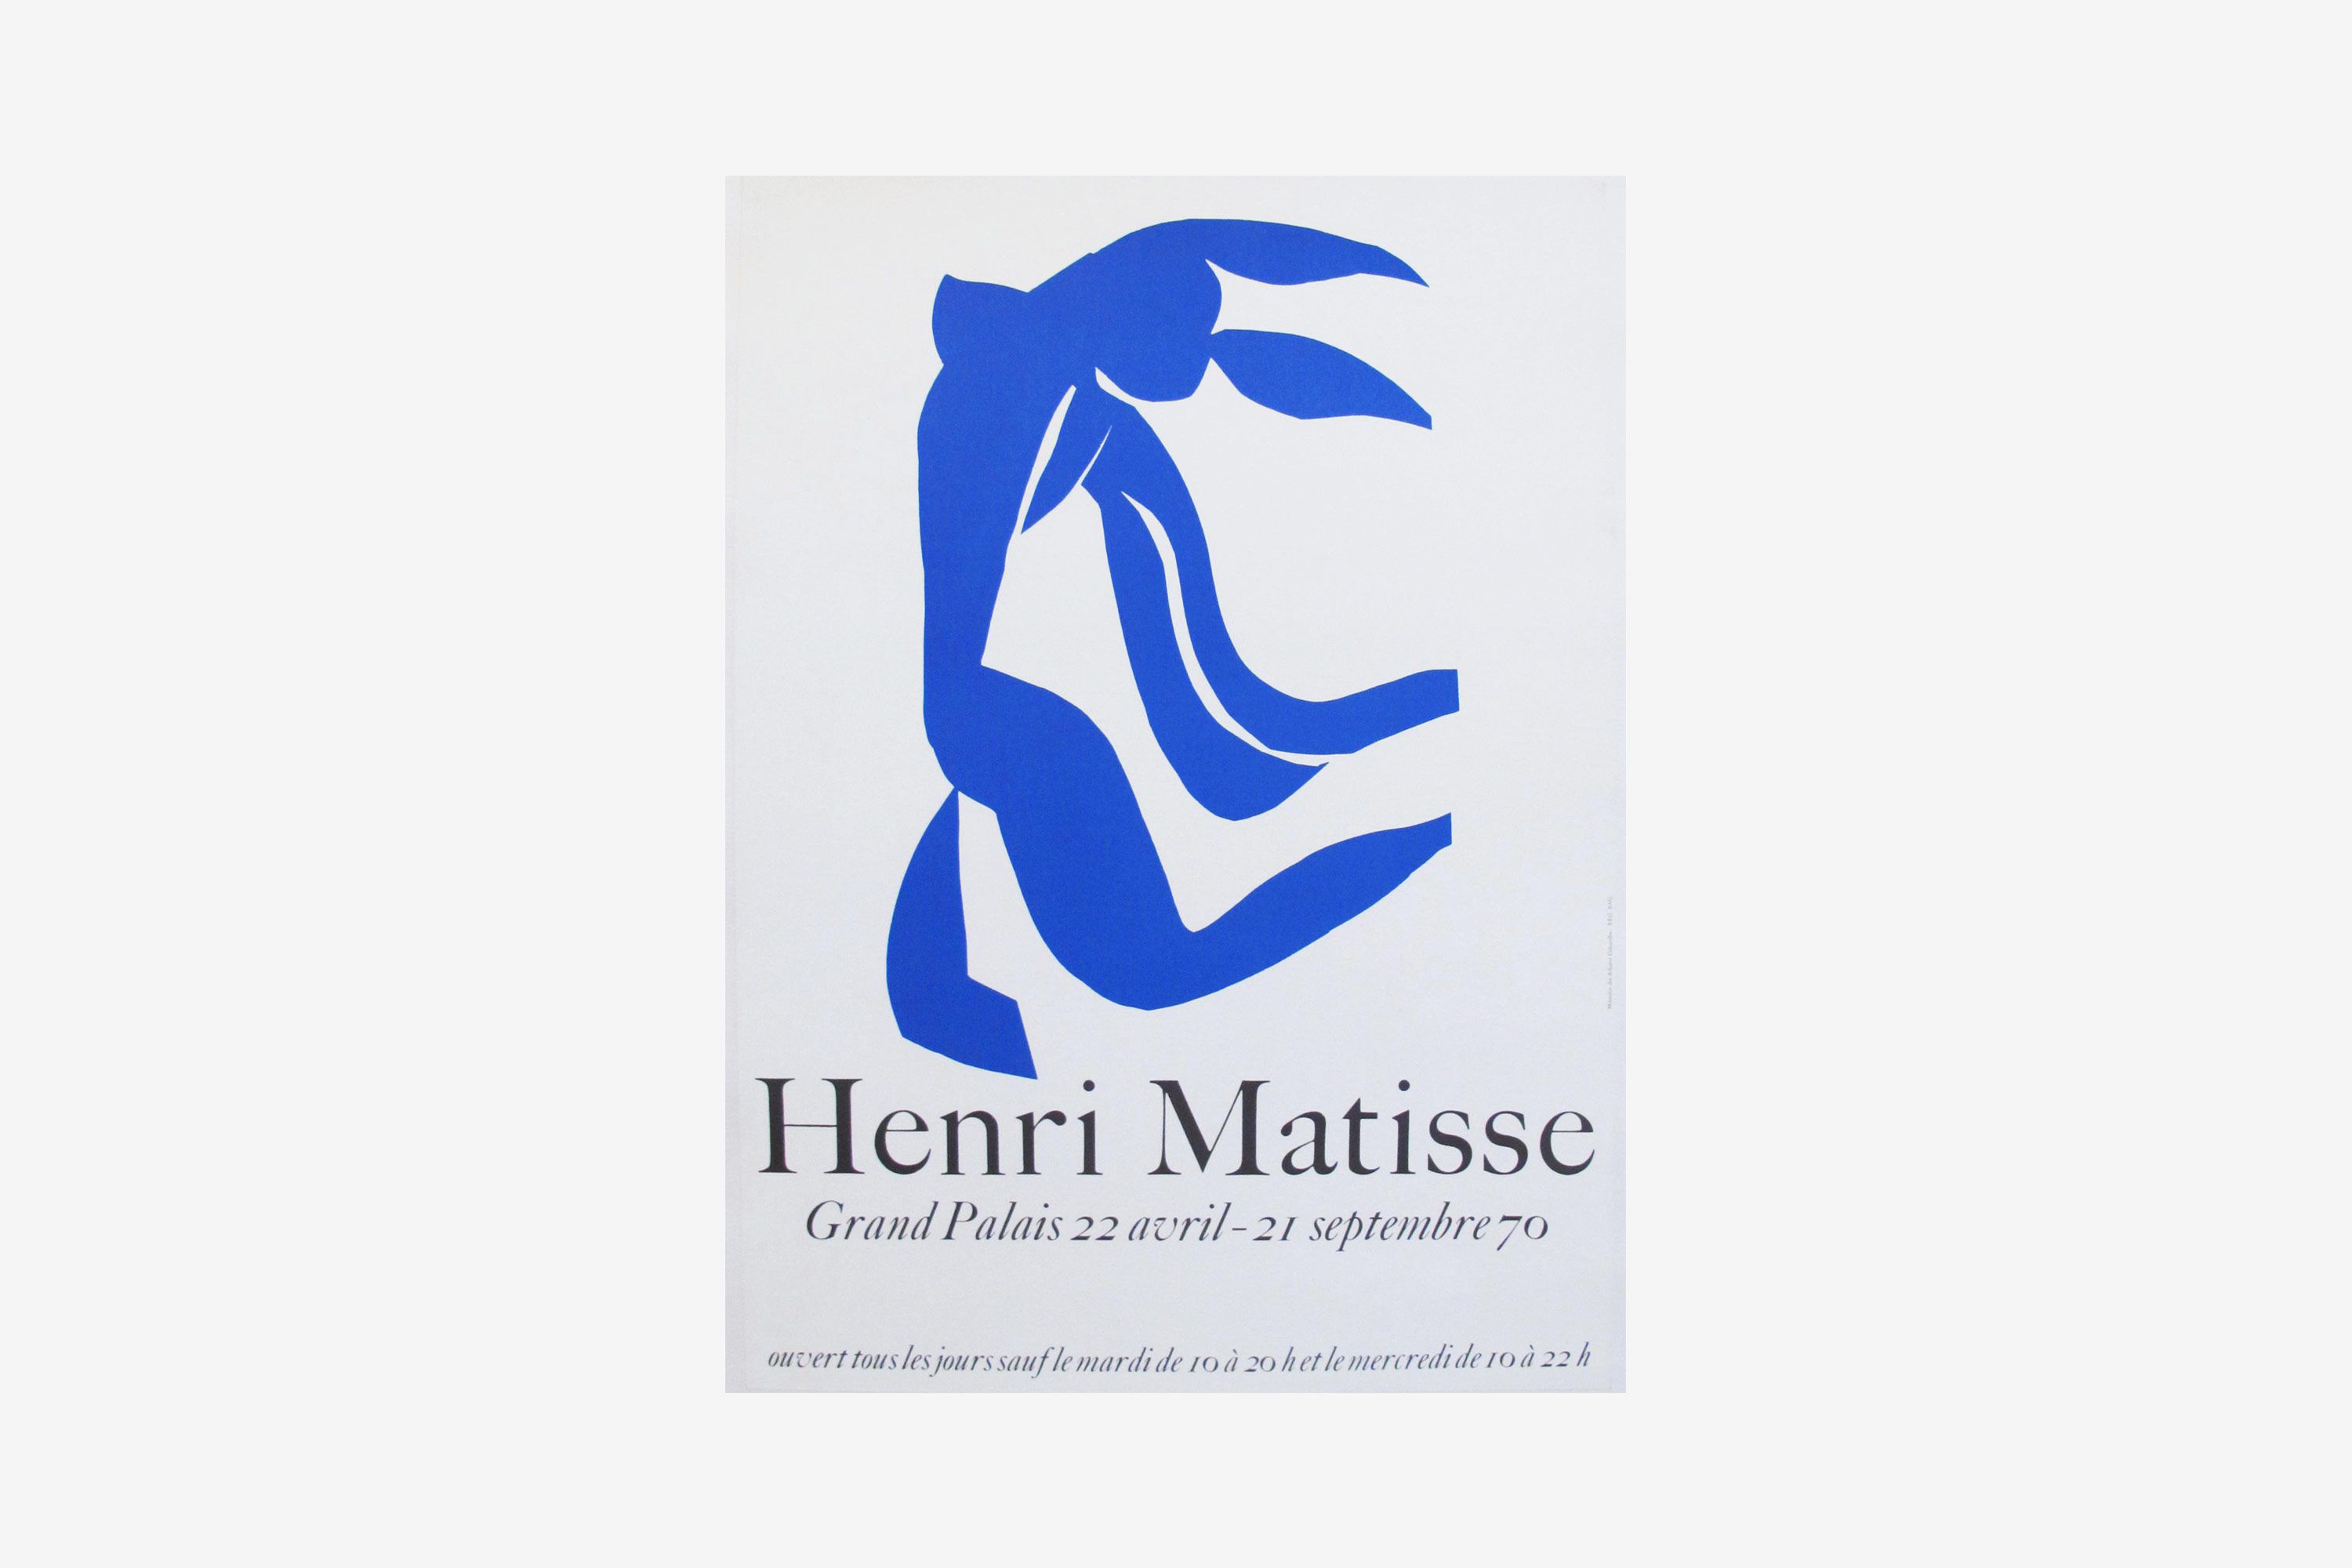 Matisse Art Idea 2019 | The Strategist